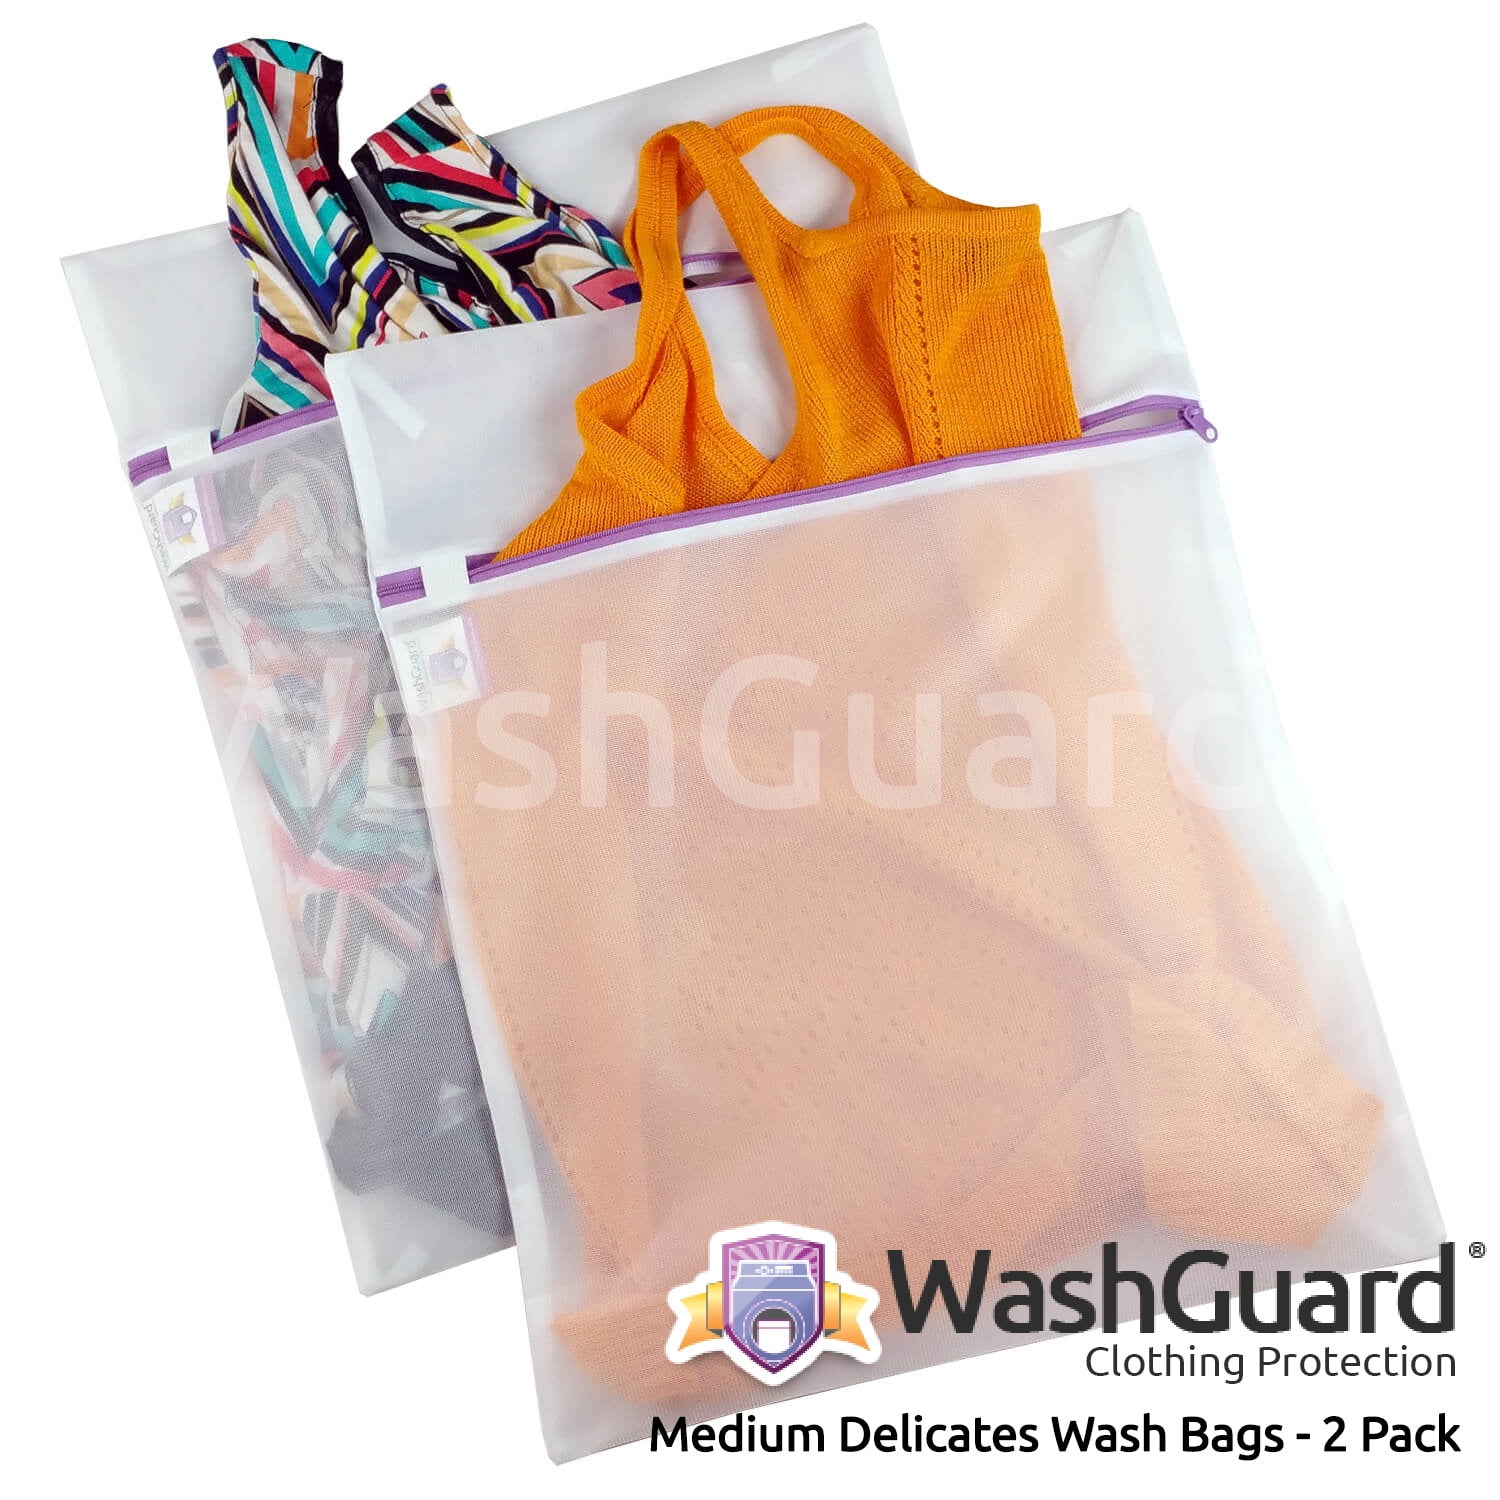 Portable Laundry Bags Organizer Washing Bag Shoes Mesh Dry Storage Wash Shoe Net